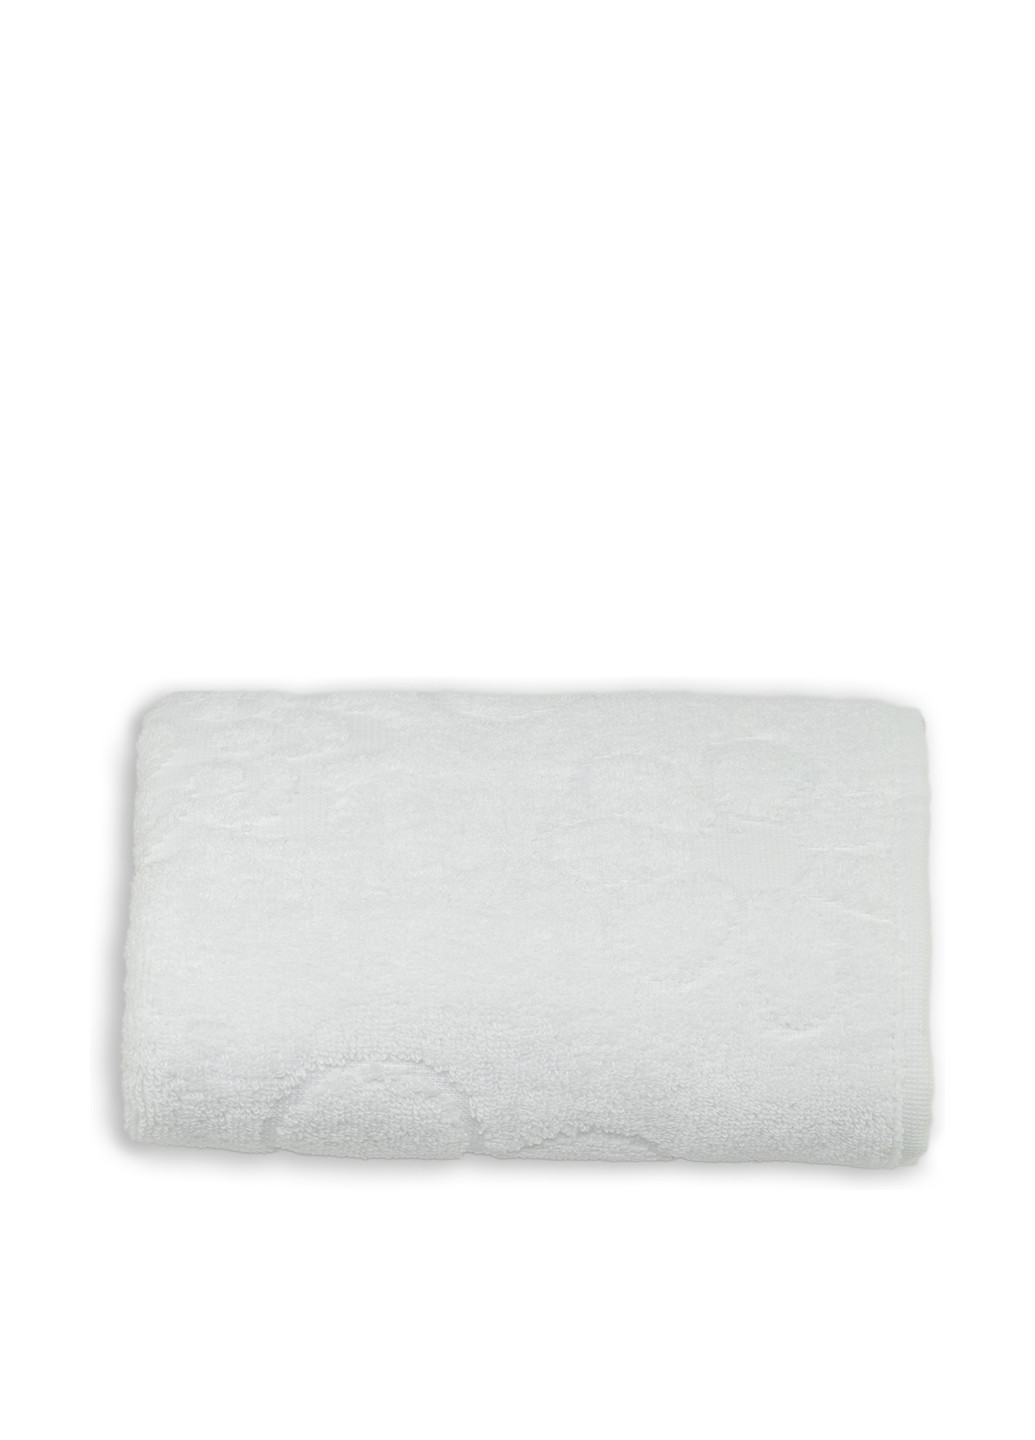 No Brand полотенце, 50х90 см однотонный белый производство - Турция